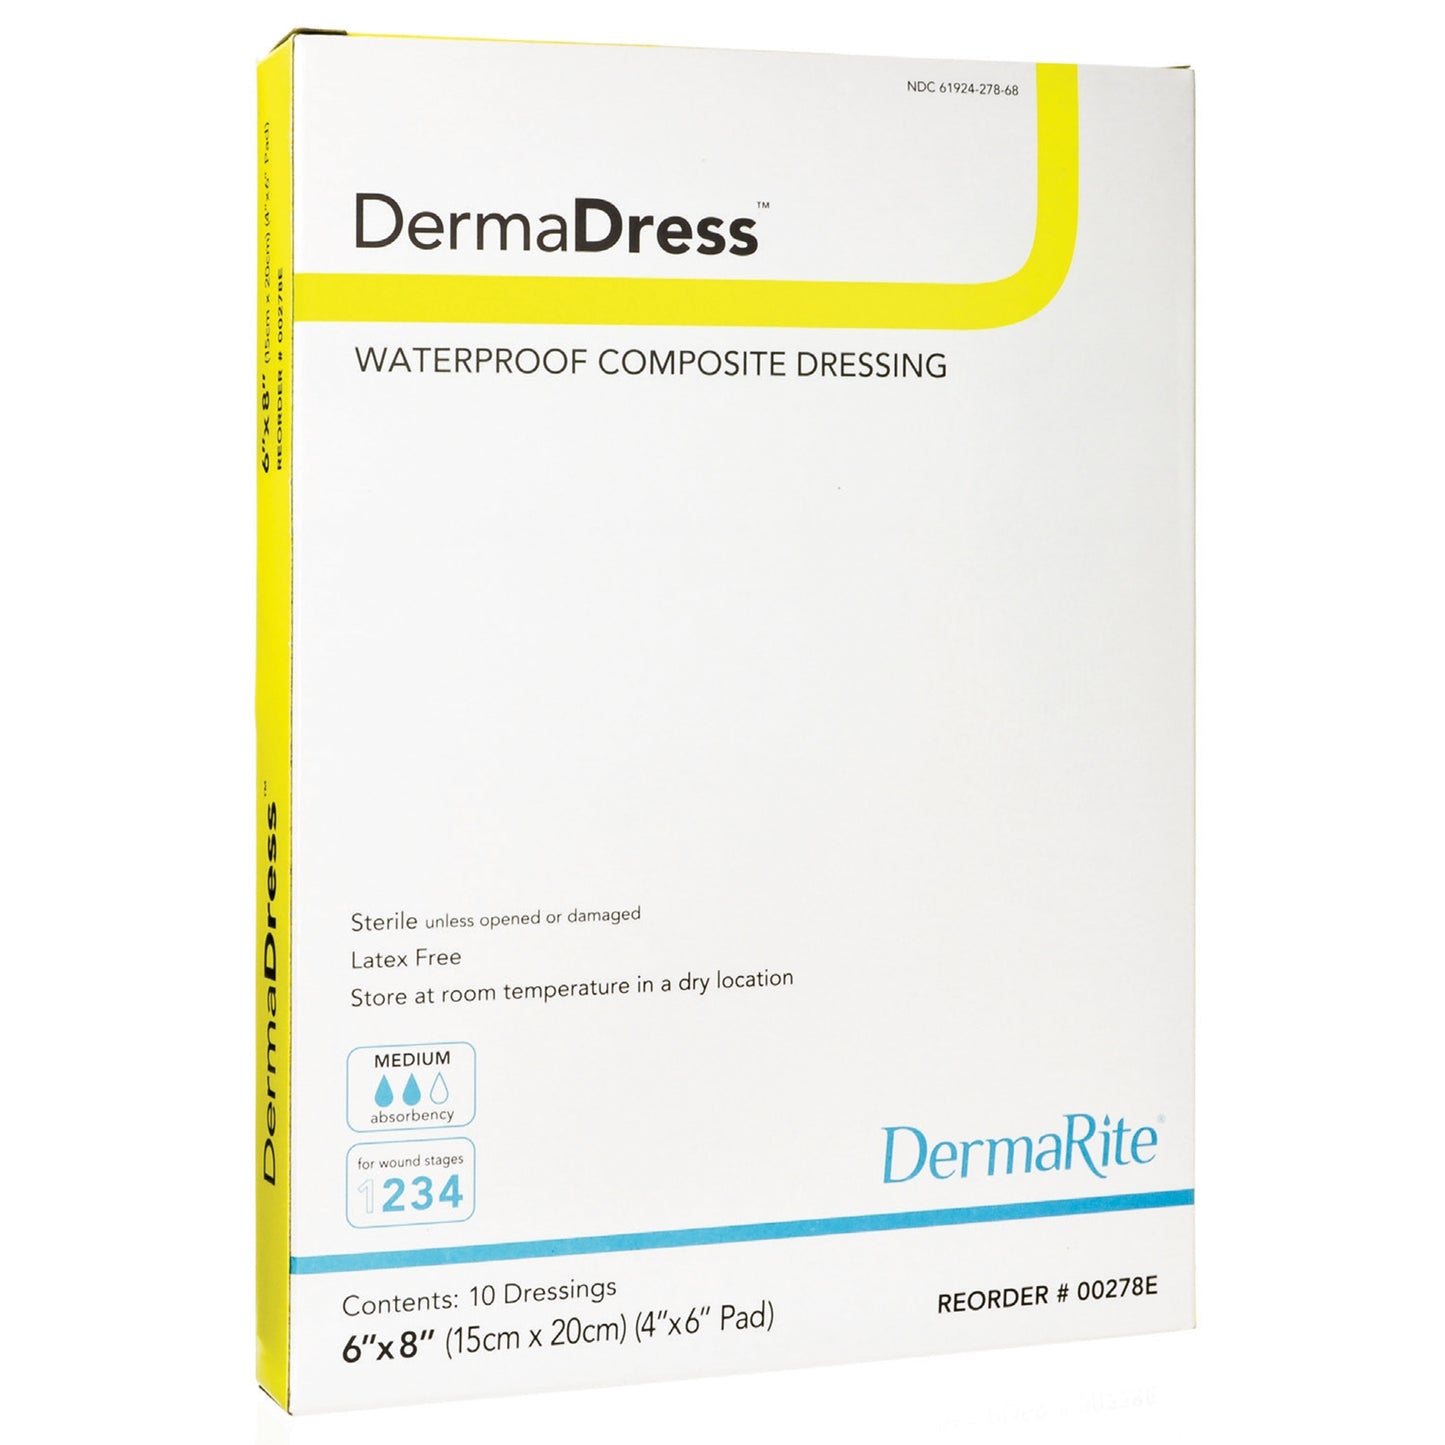 DermaRite Composite Dressing DermaDress 6 x 8 Inch Rectangle Sterile - 00278E